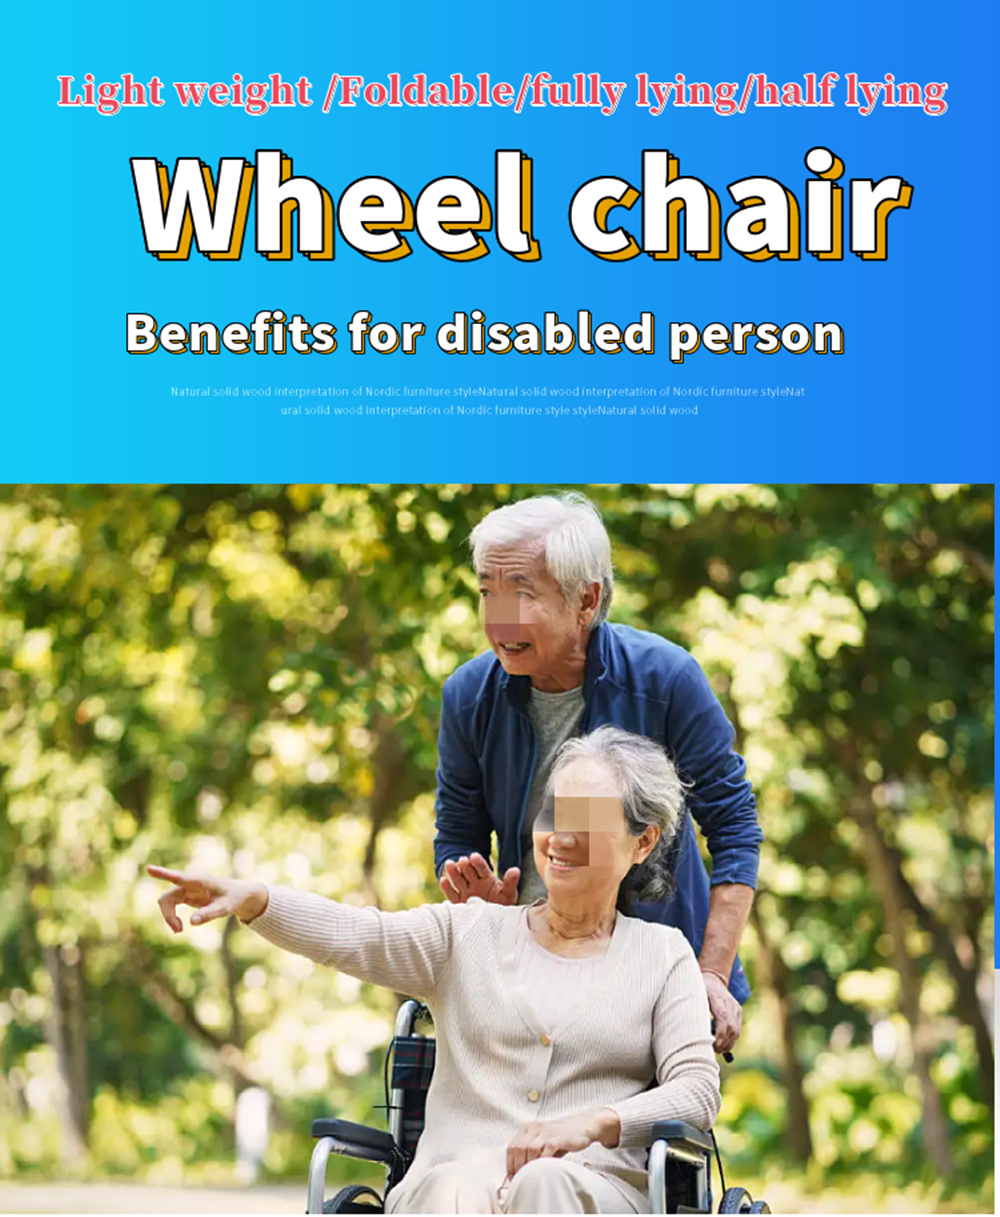 Cheap Economic Aluminum Alloy Manual Wheelchair for Elderly with Detachable Footrest